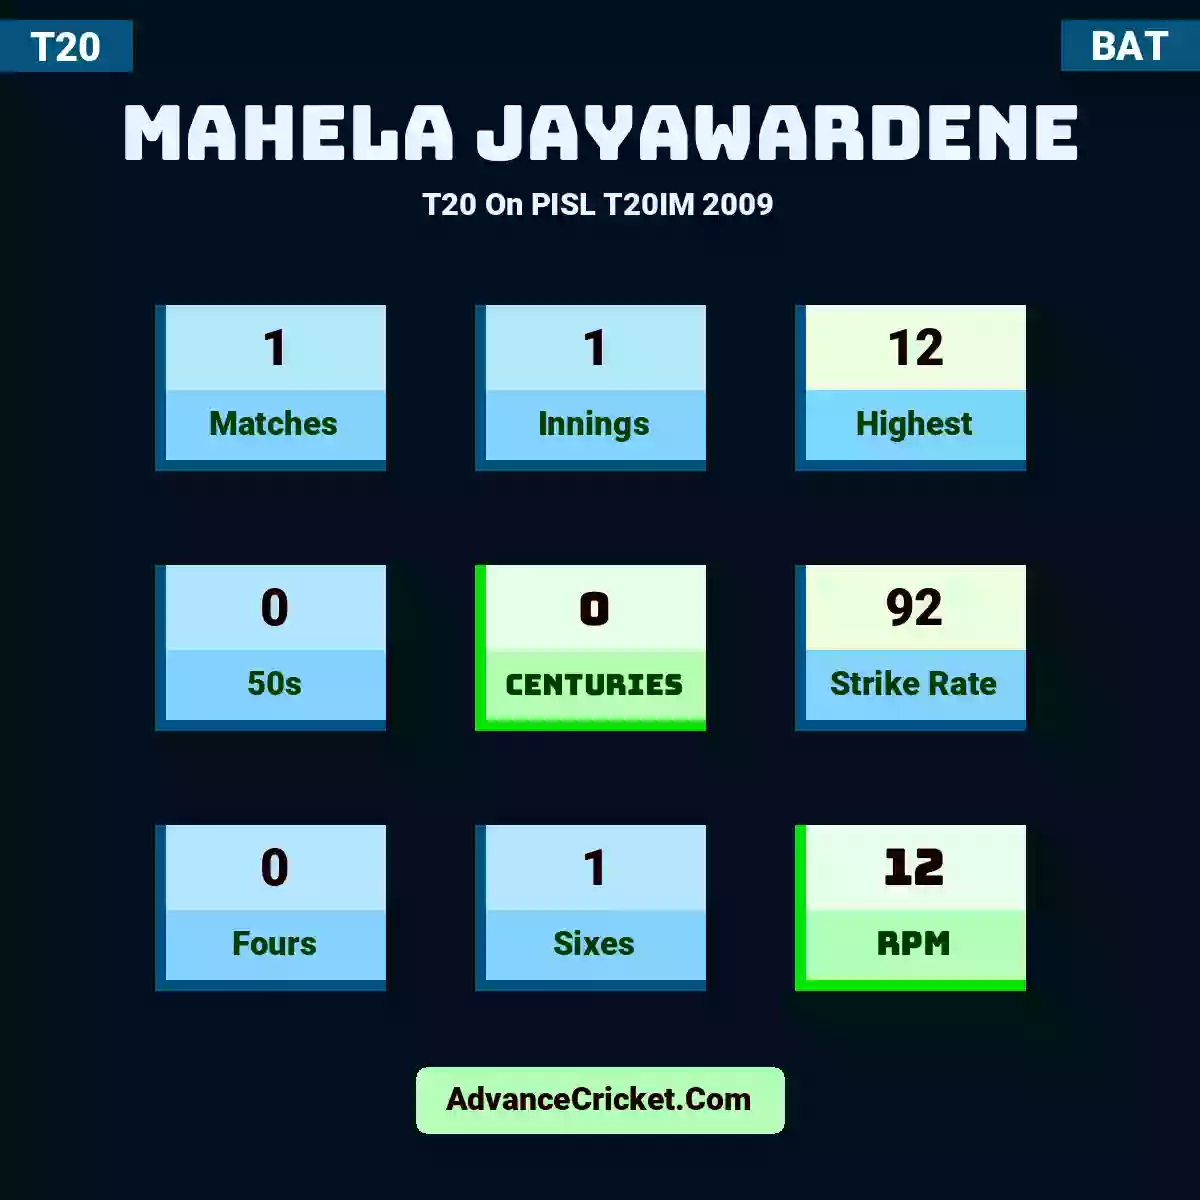 Mahela Jayawardene T20  On PISL T20IM 2009, Mahela Jayawardene played 1 matches, scored 12 runs as highest, 0 half-centuries, and 0 centuries, with a strike rate of 92. M.Jayawardene hit 0 fours and 1 sixes, with an RPM of 12.